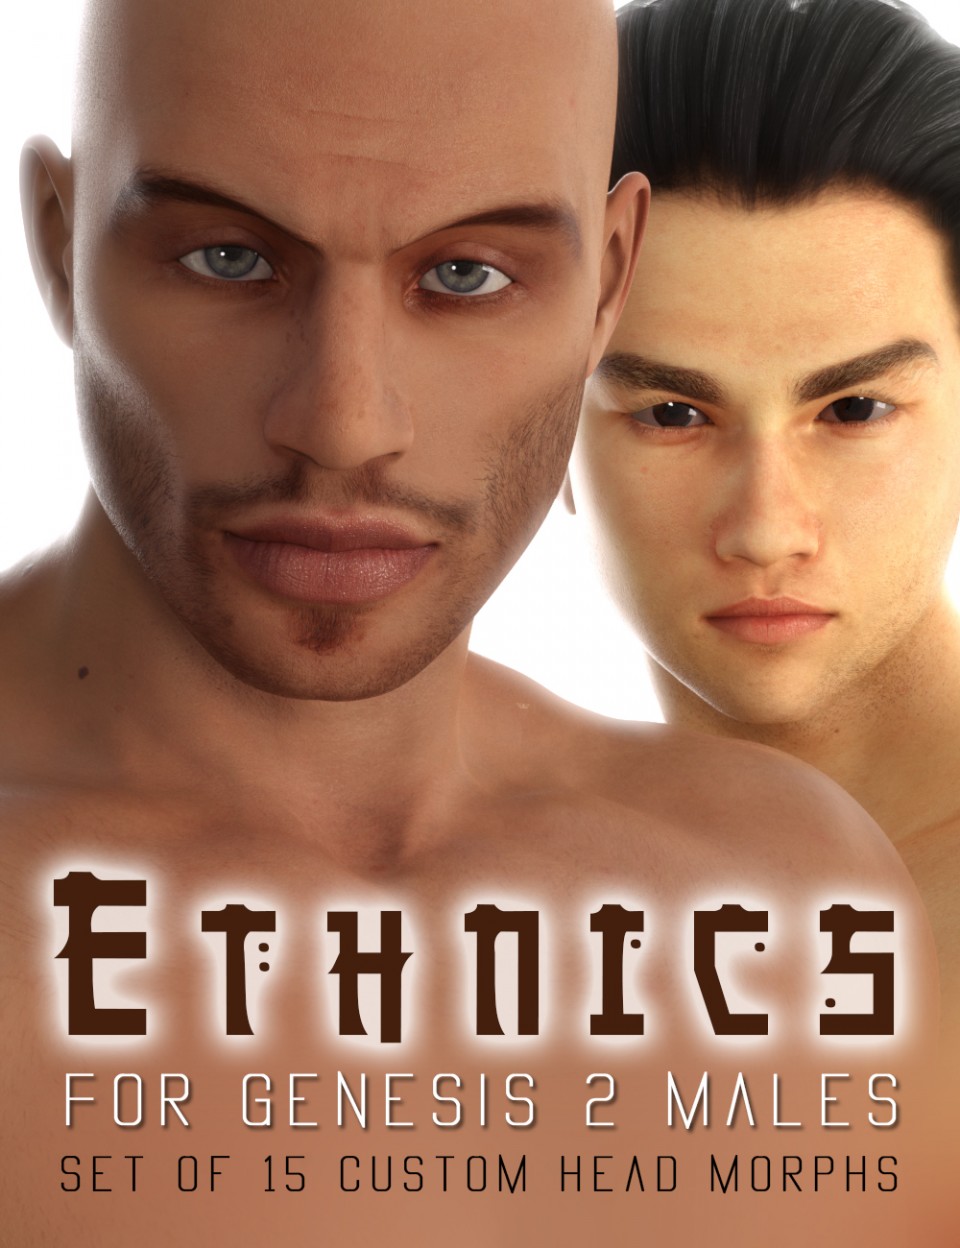 Ethnics for Genesis 2 Male(s)